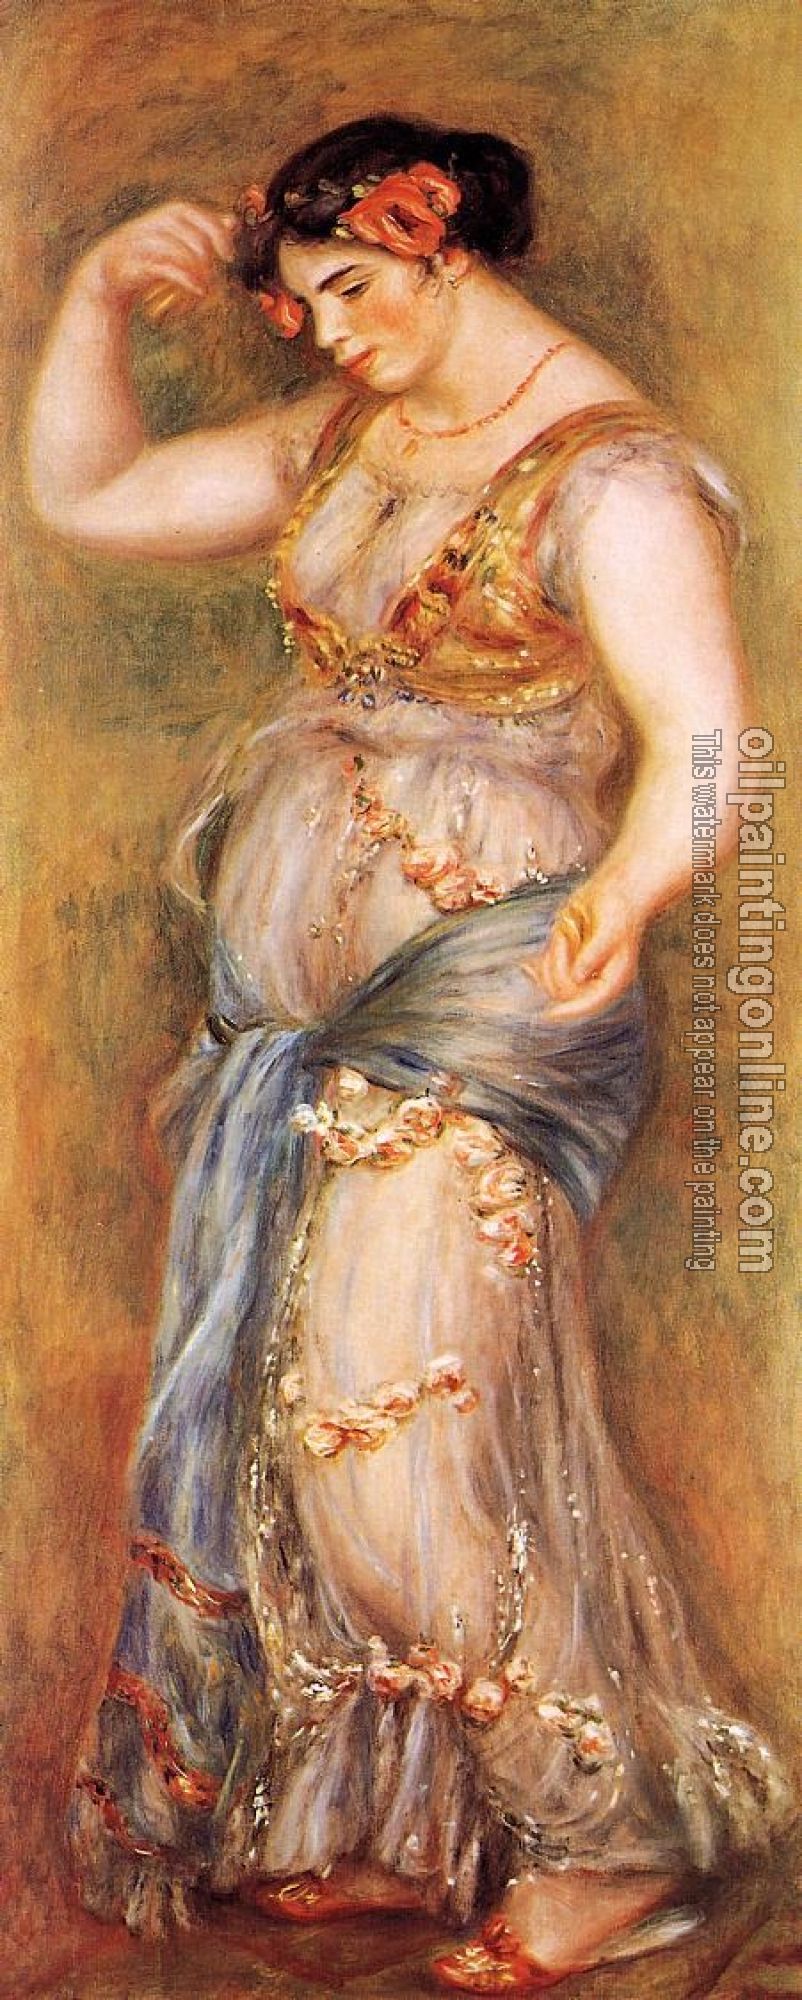 Renoir, Pierre Auguste - Dancer with Castanets